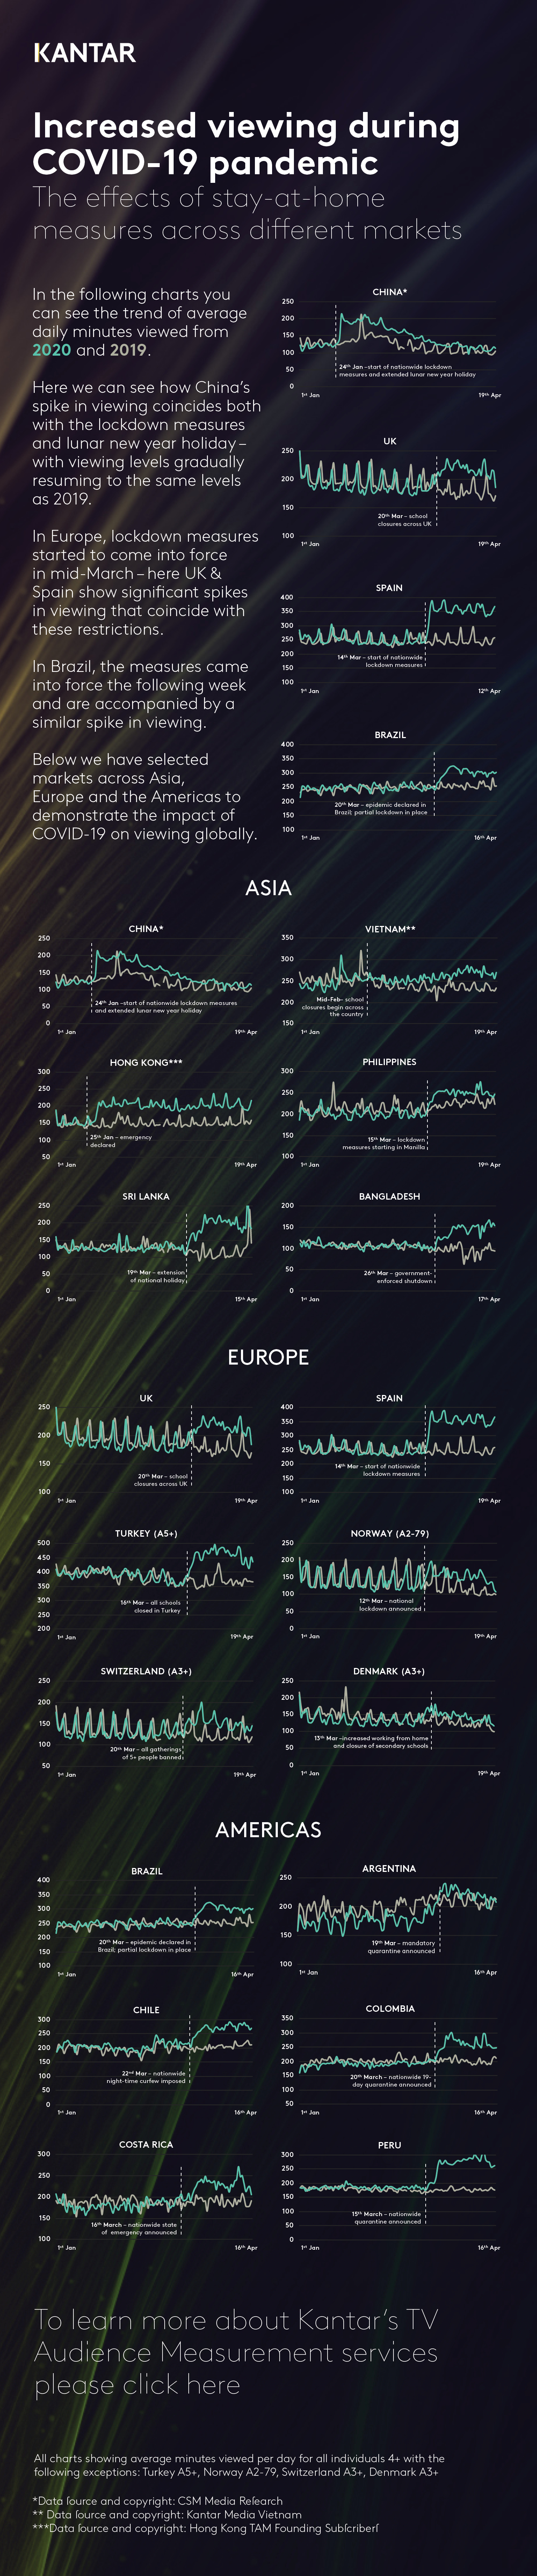 Media Consumption COVID-19 Infographic